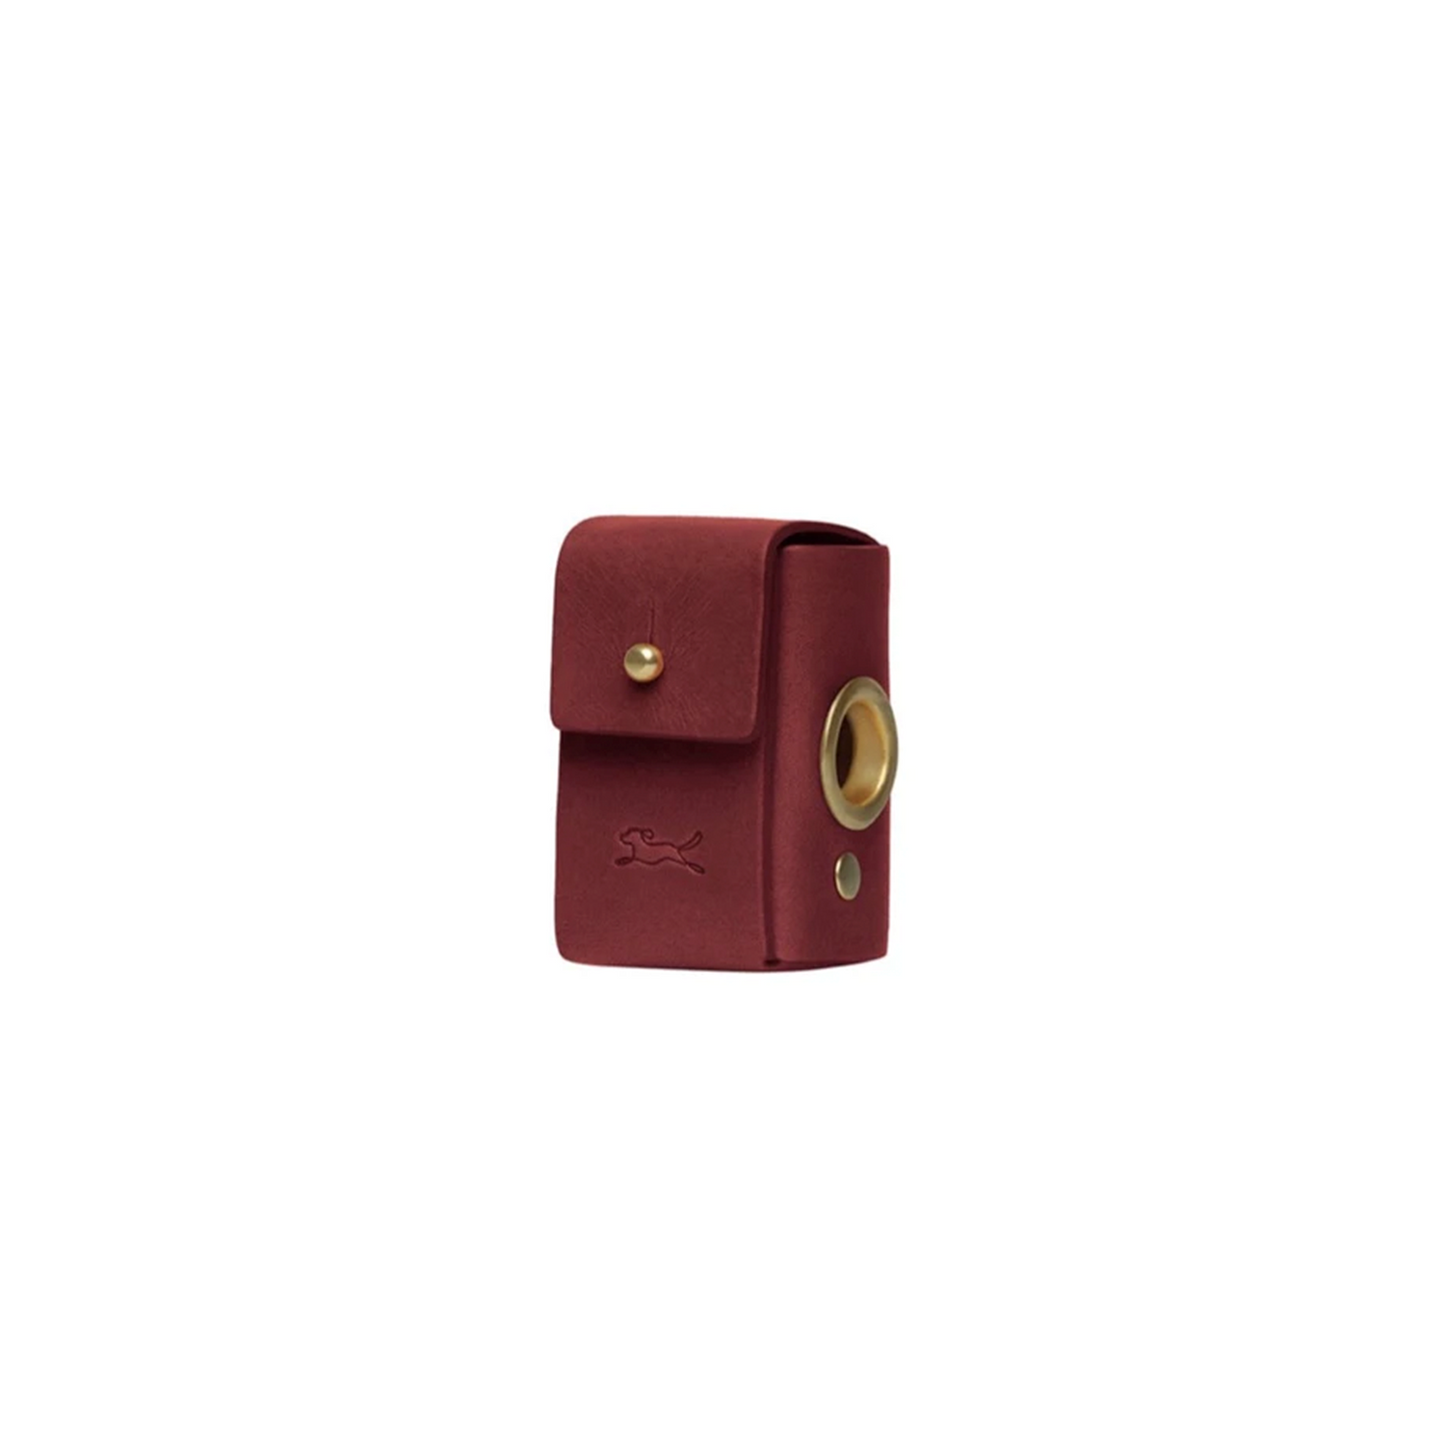 Coopers Maple Red Leather Luxury Designer Poop Bag Dispenser